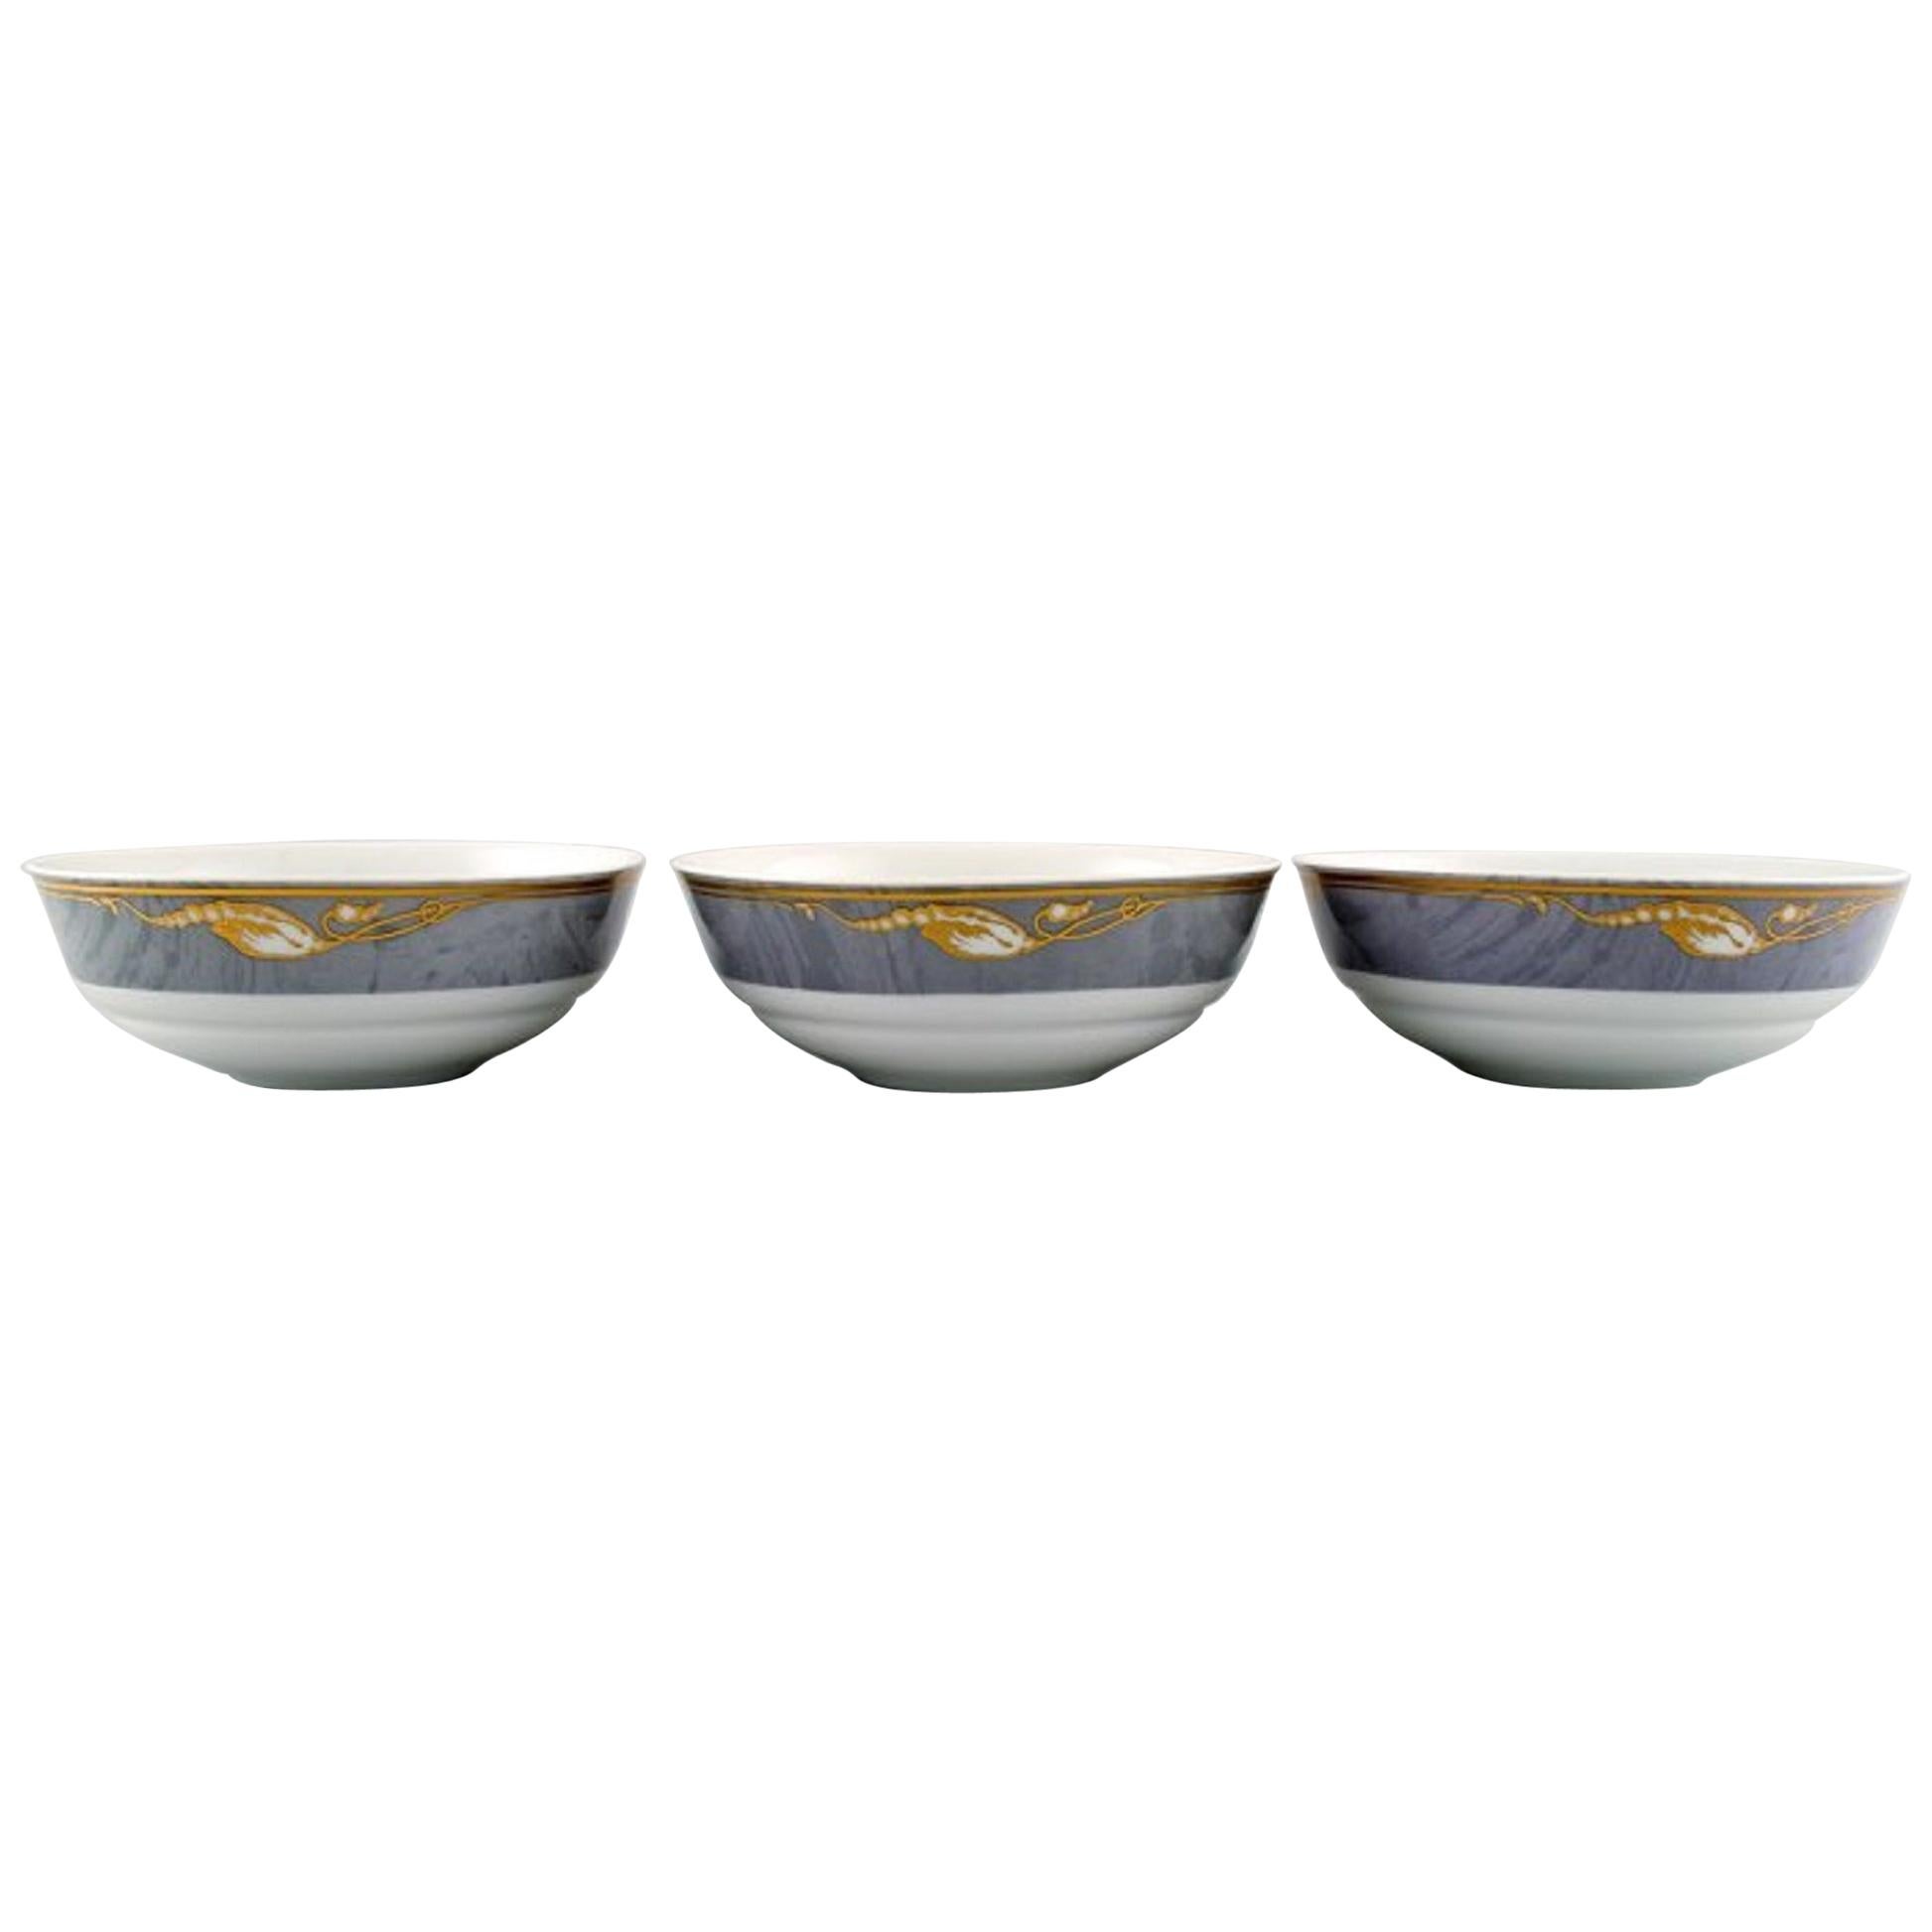 Three Royal Copenhagen Gray Magnolia Bowls in Porcelain, Late 20th Century